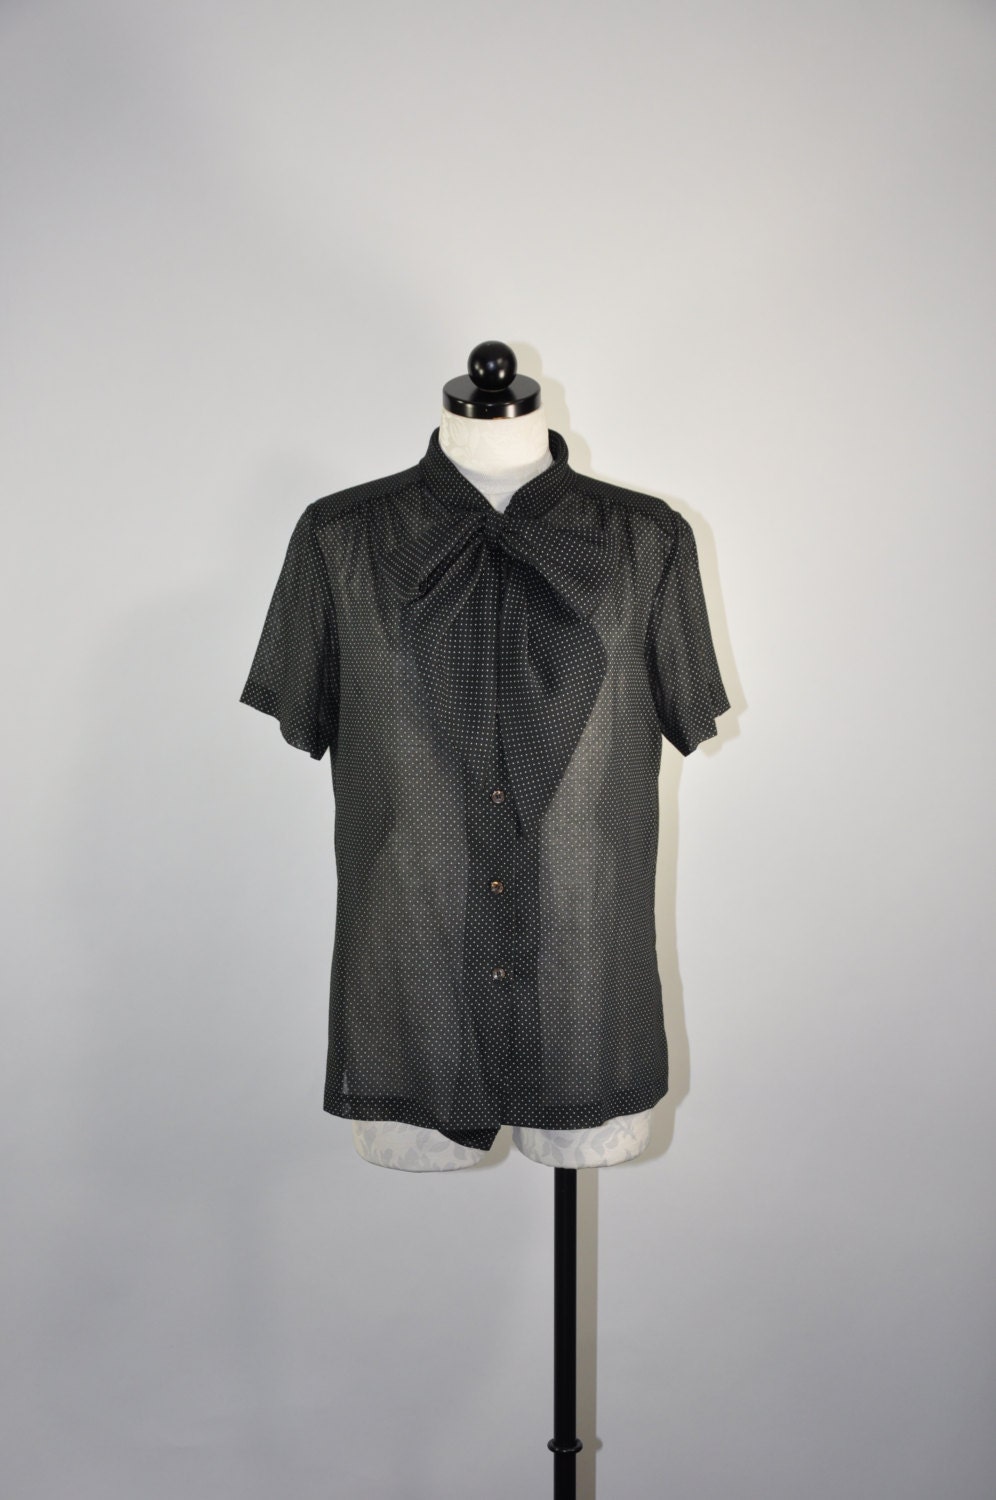 60s black secretary blouse / vintage 1960s bow polka dot shirt / Miss Fashionality blouse - QuietUnrest